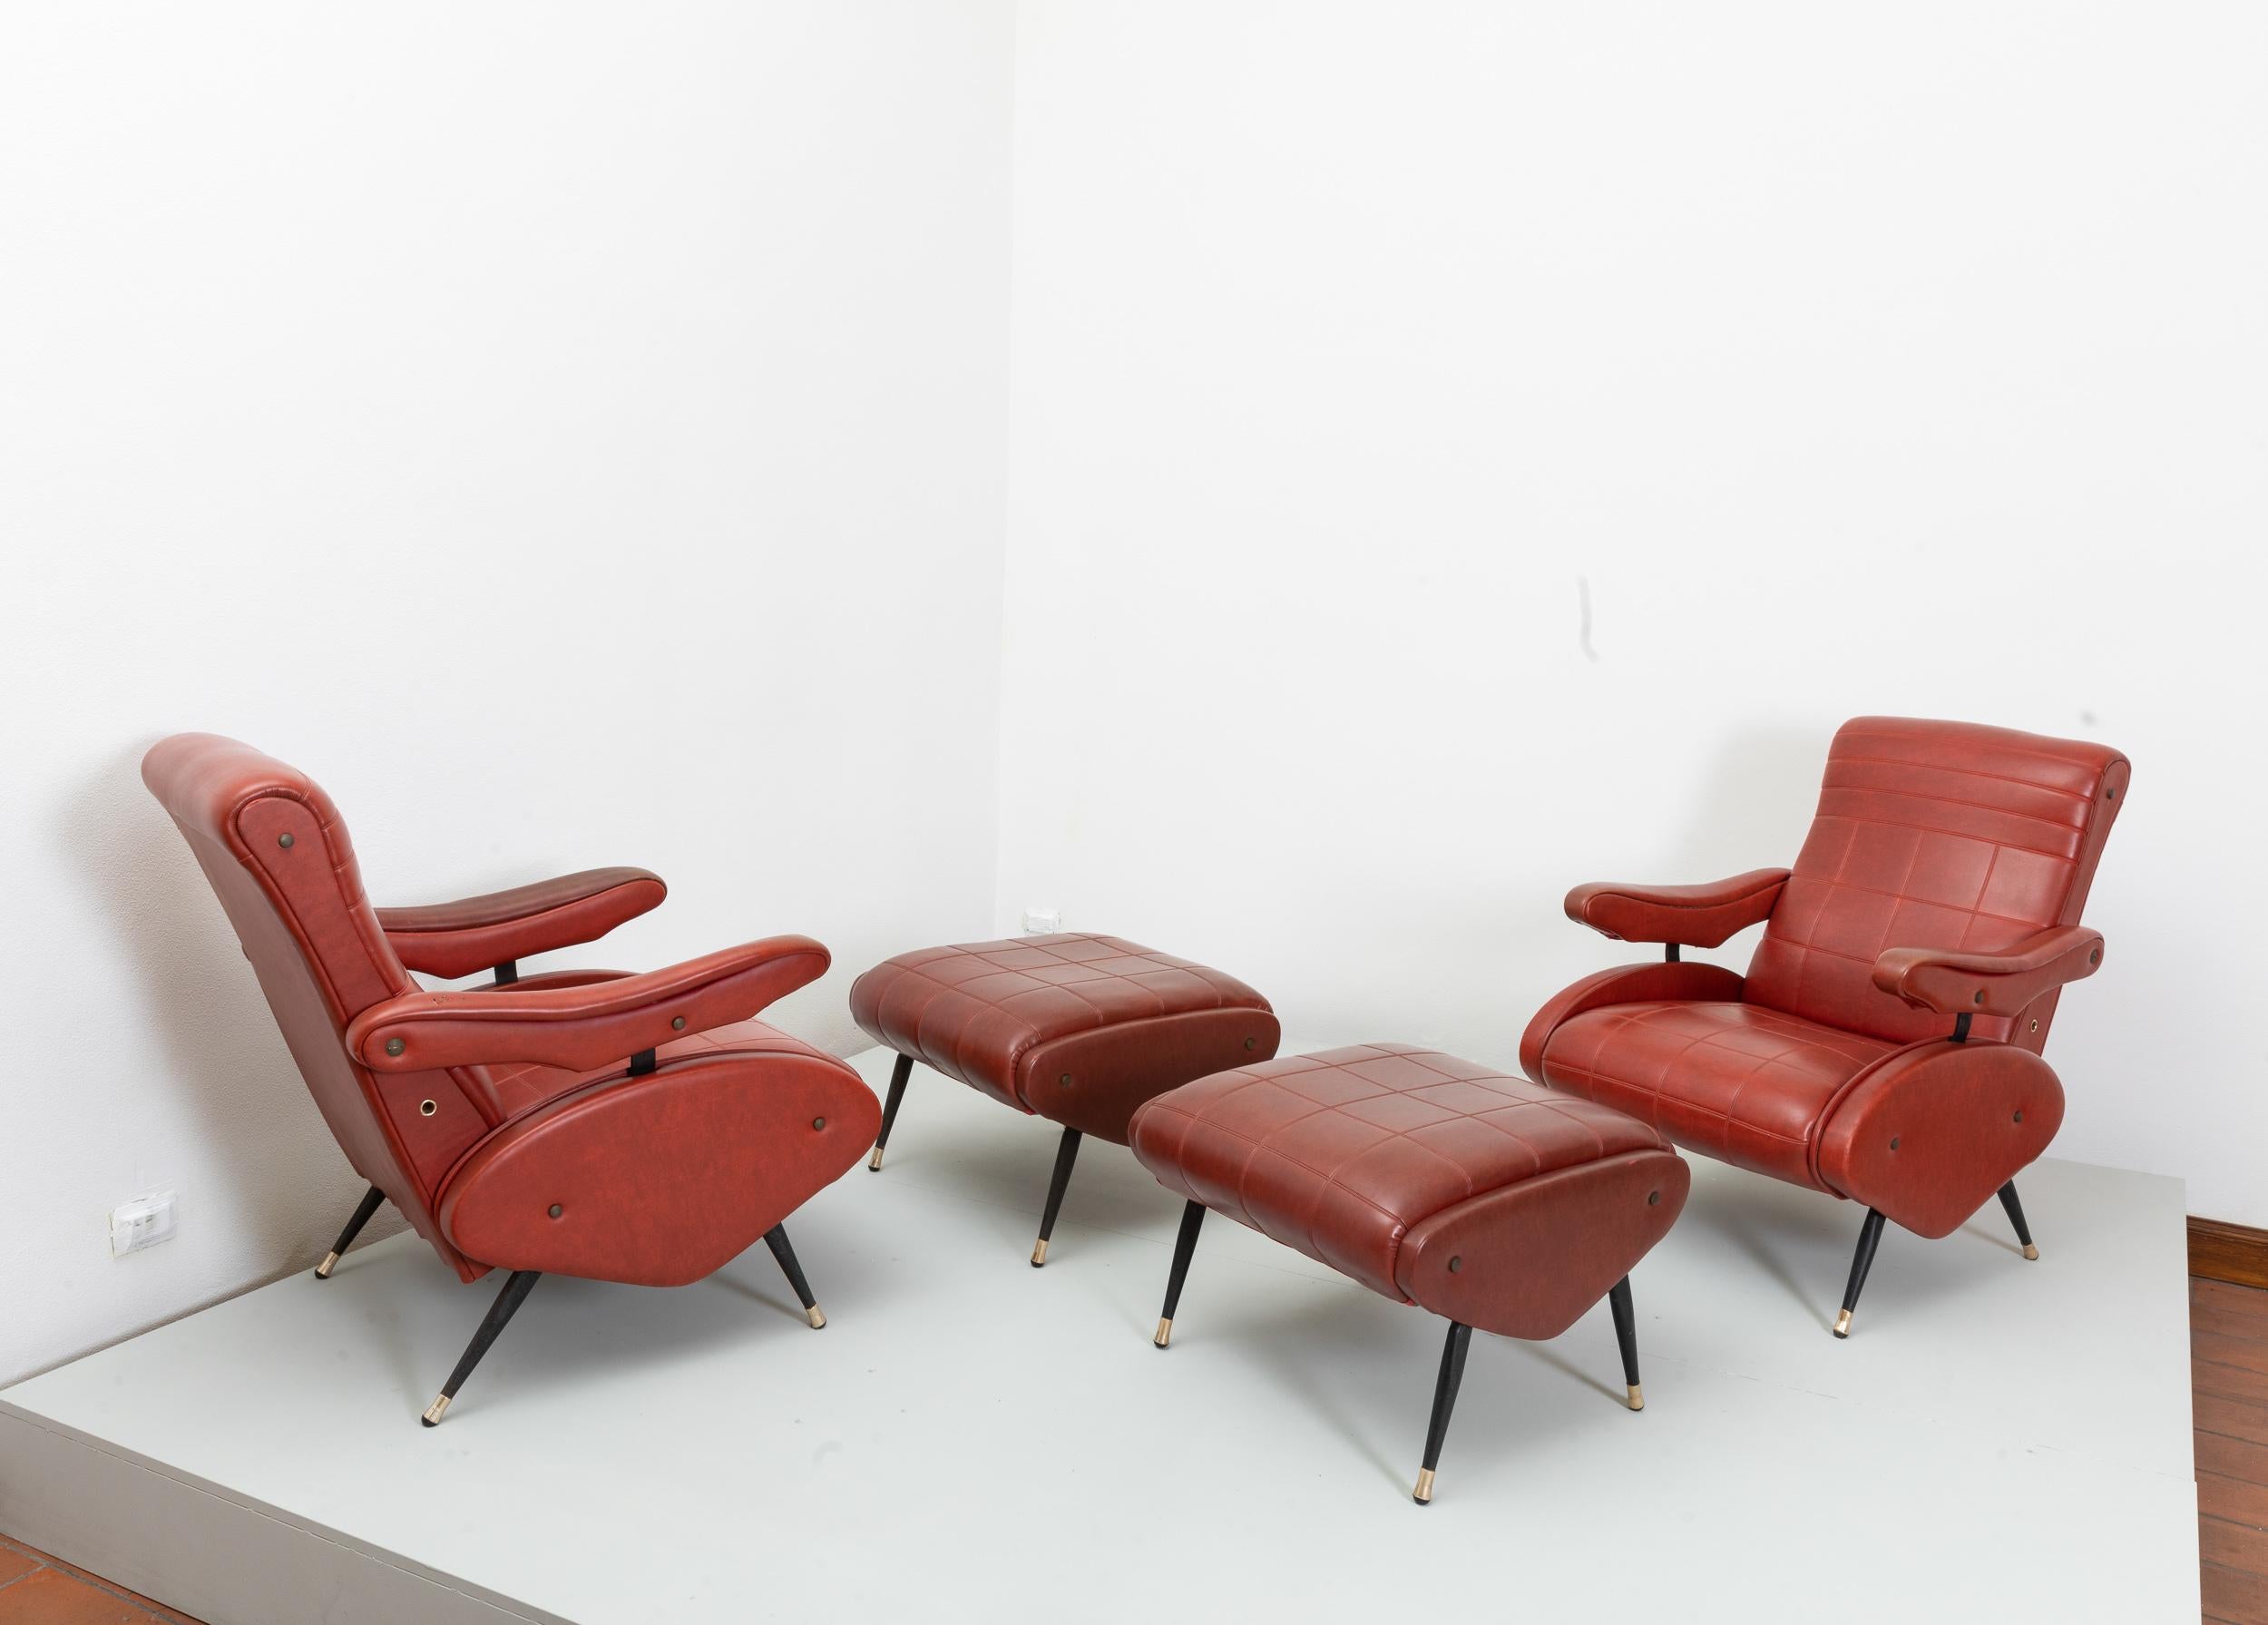 Nello Pini Prod. Novarredo c. 1950-1960 Two reclining armchairs and two pouffs 4